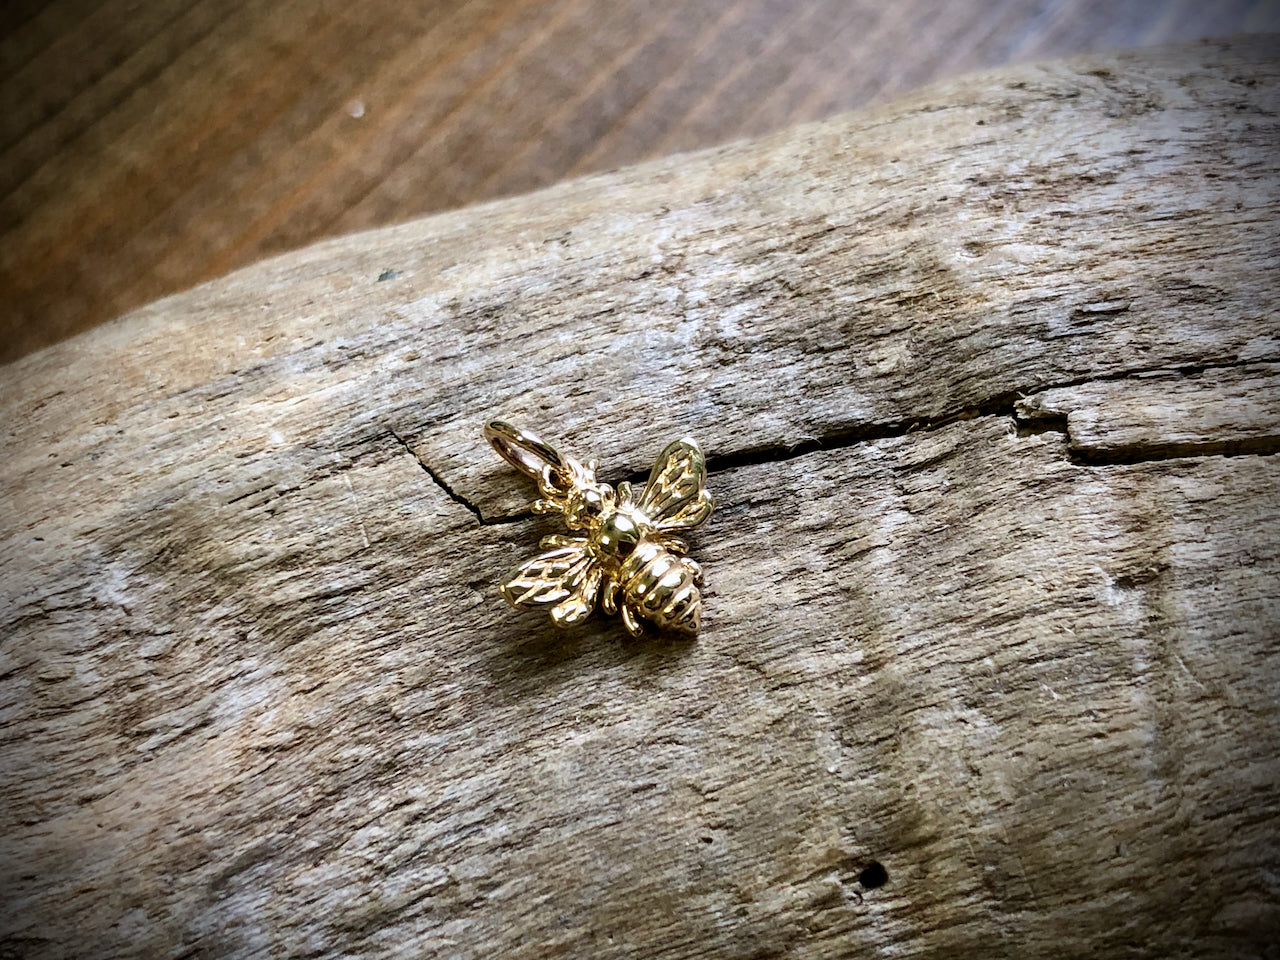 Small Bronze Bee Charm